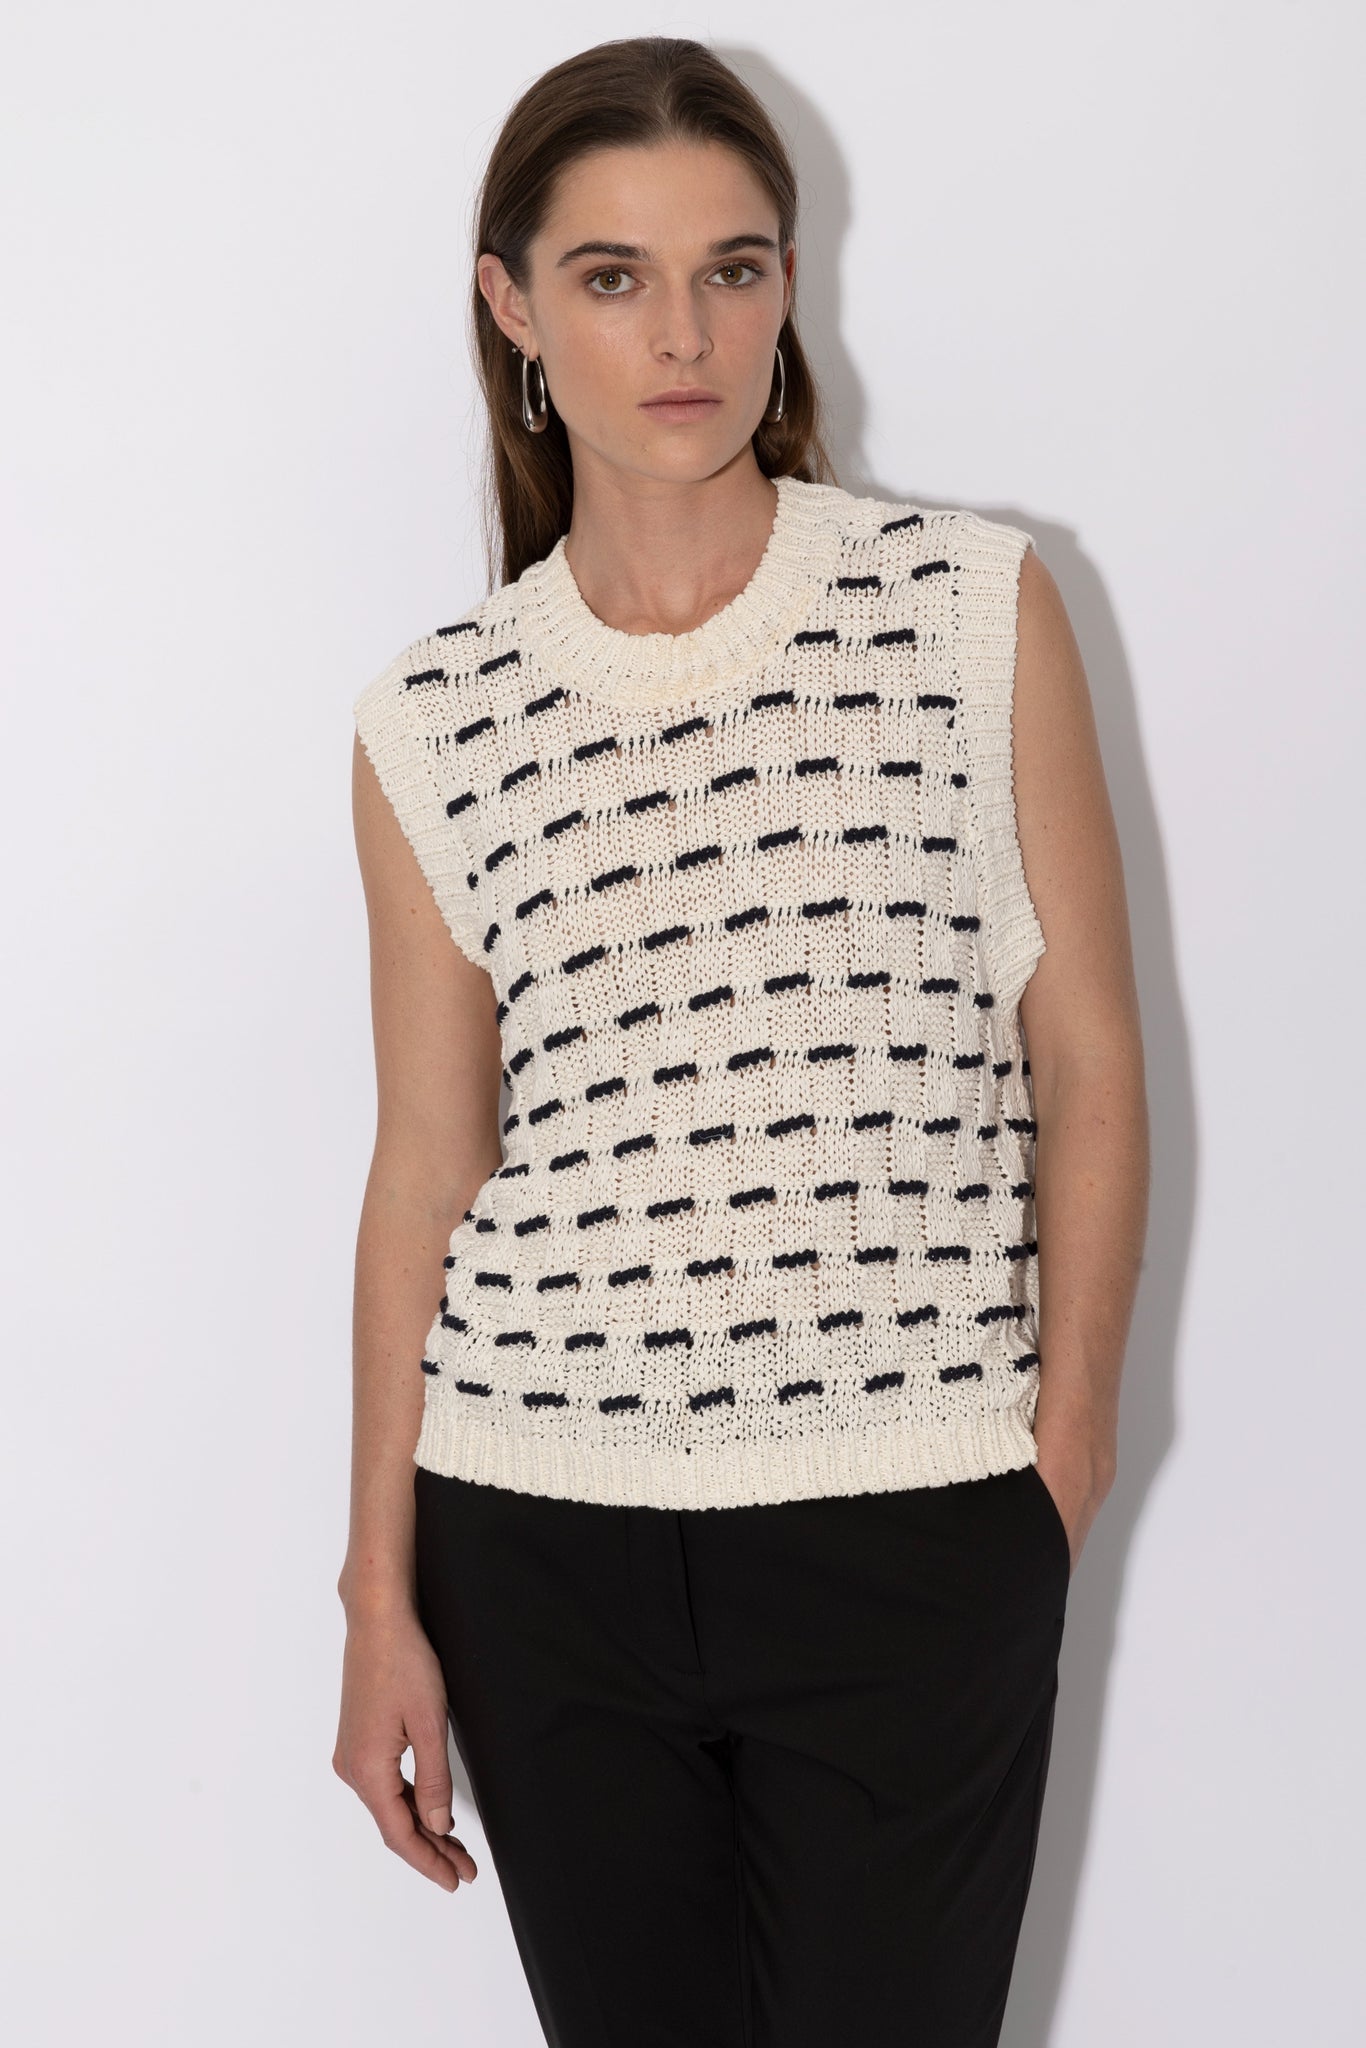 KAPPA knitted top | ECRU-NAVY